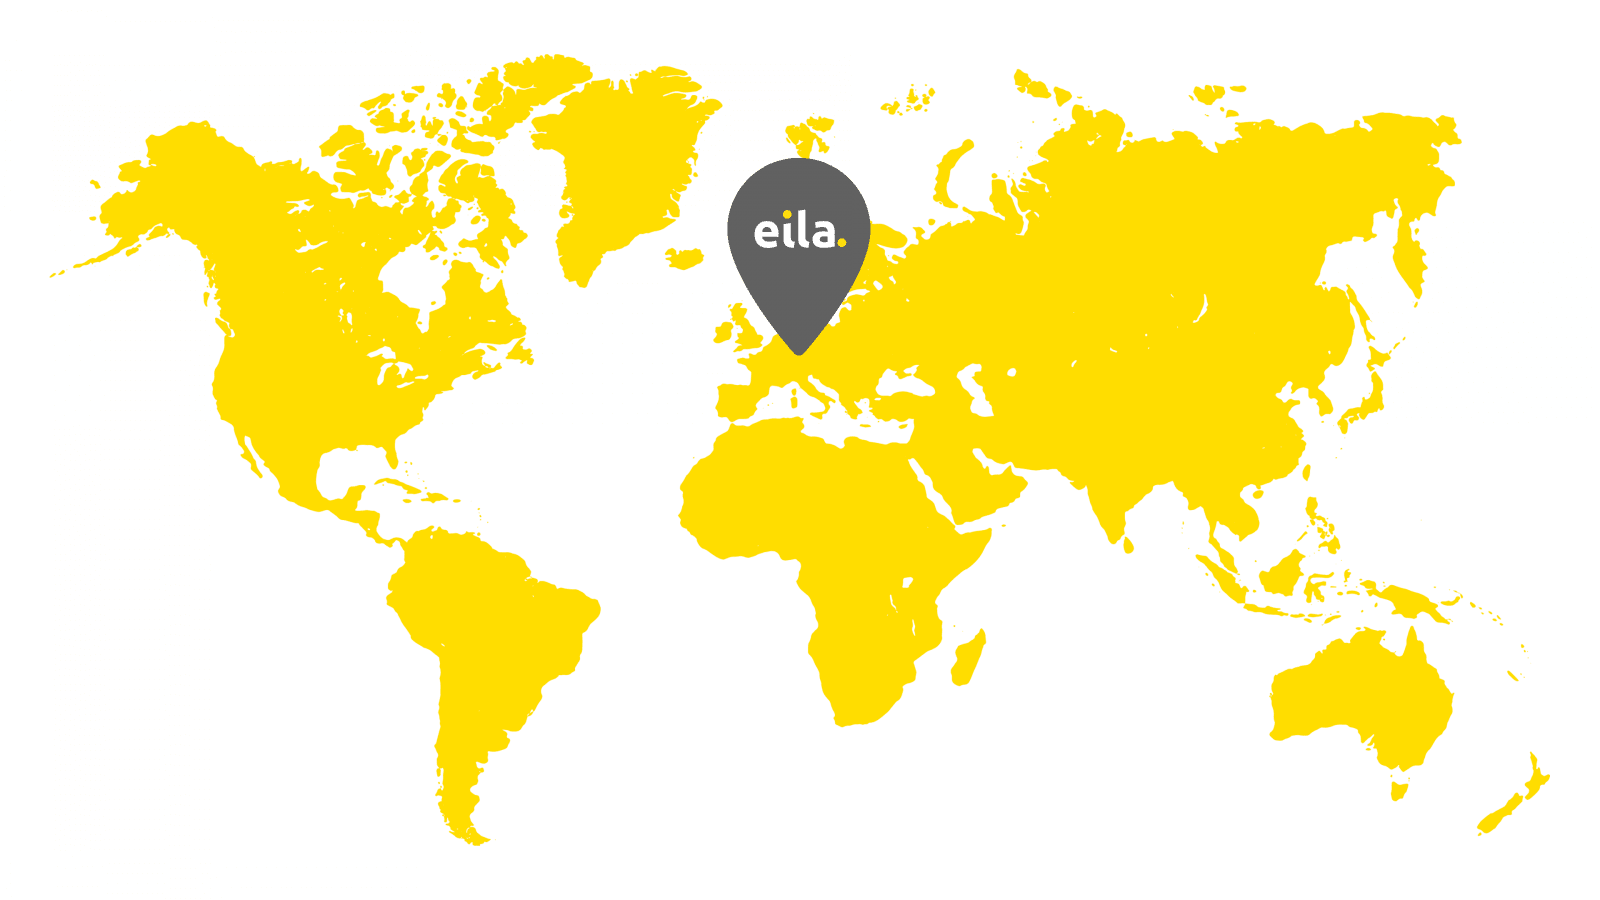 World map with eila logo